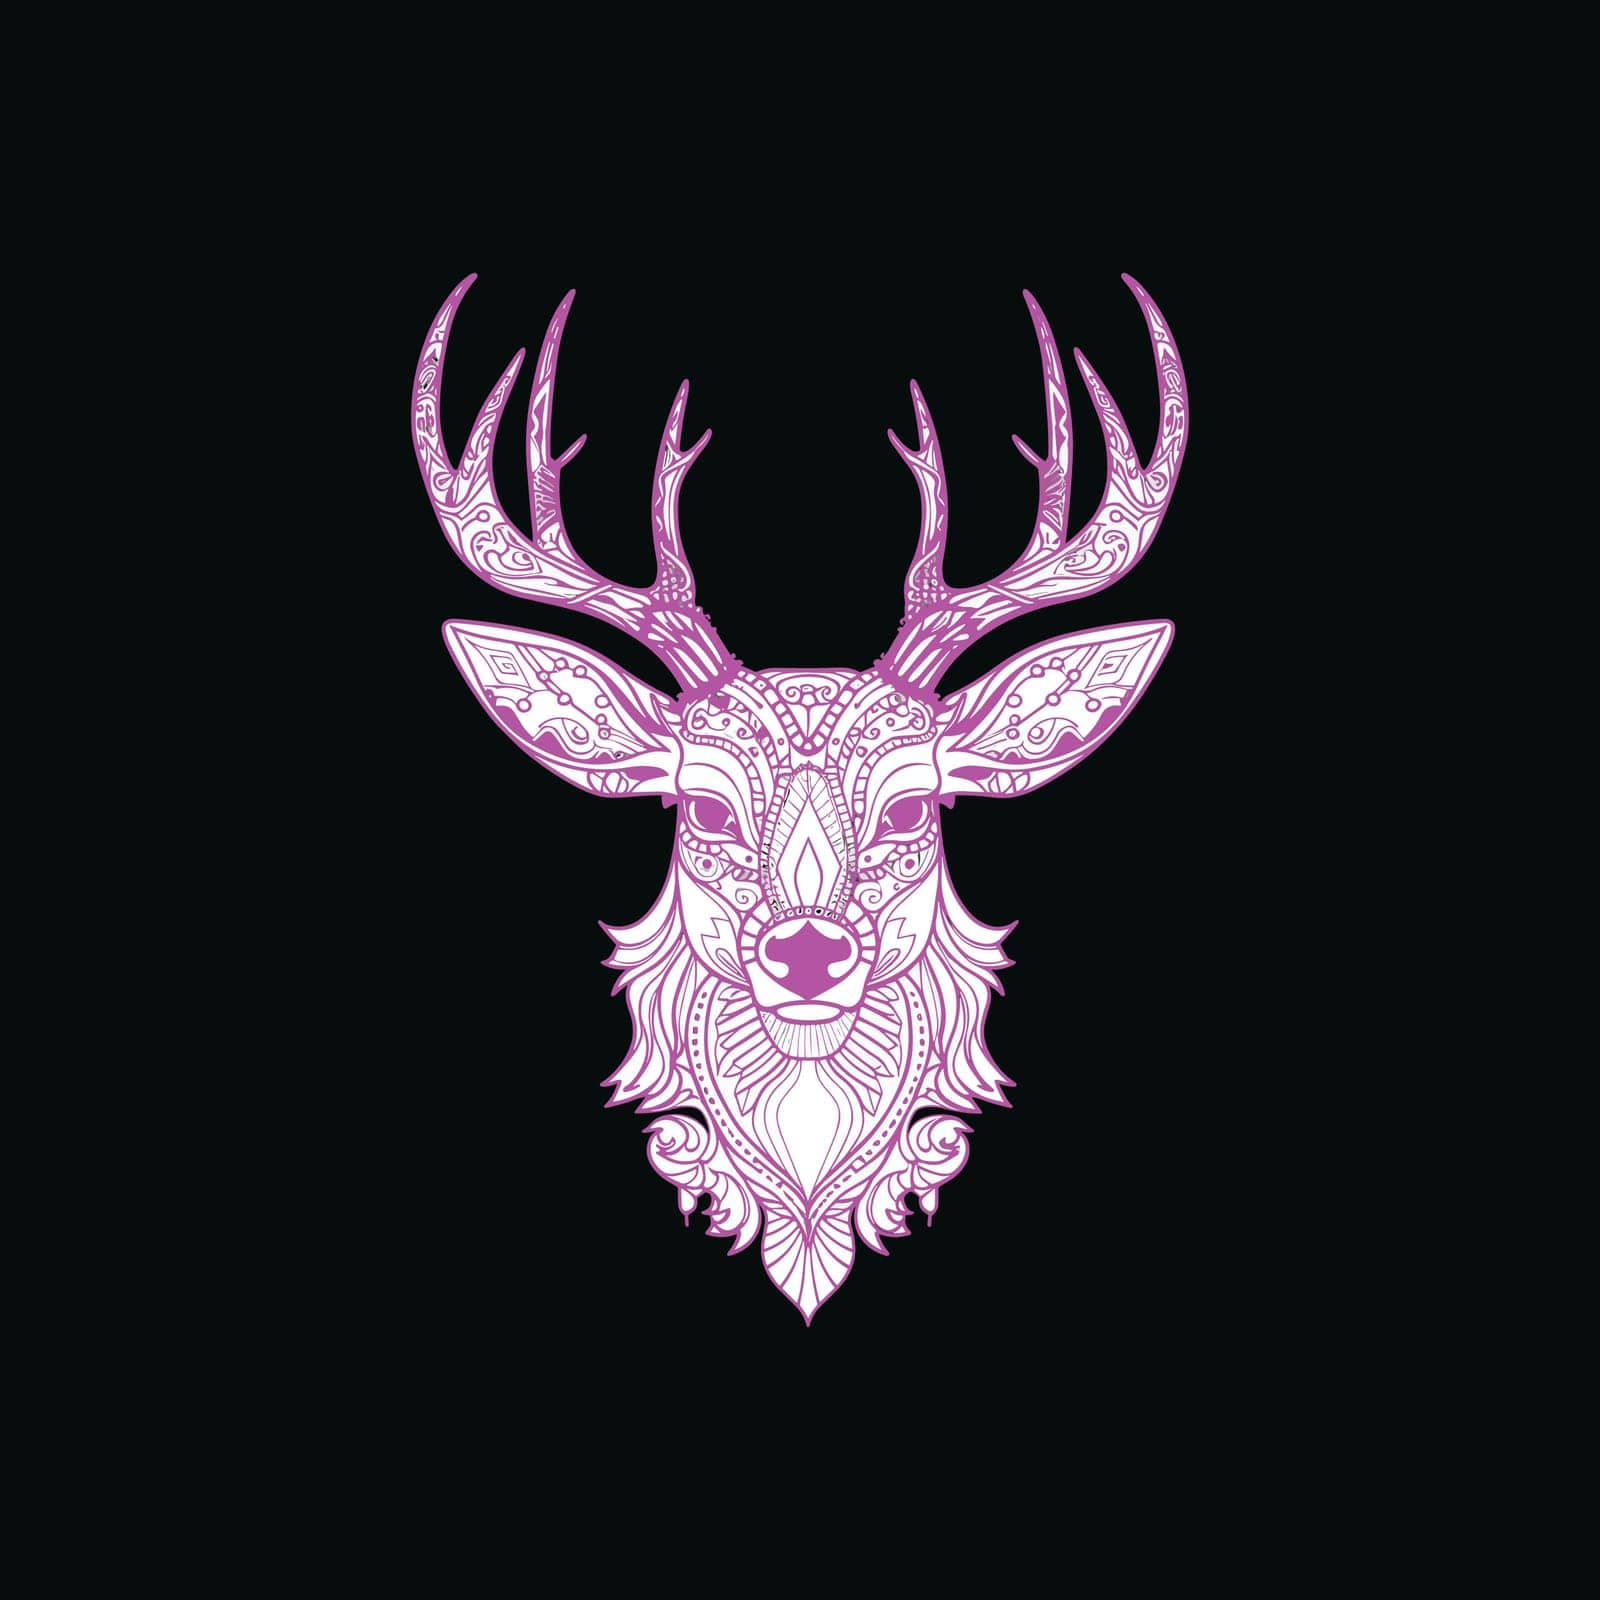 Deer head colorful illustration on black background by Vinhsino